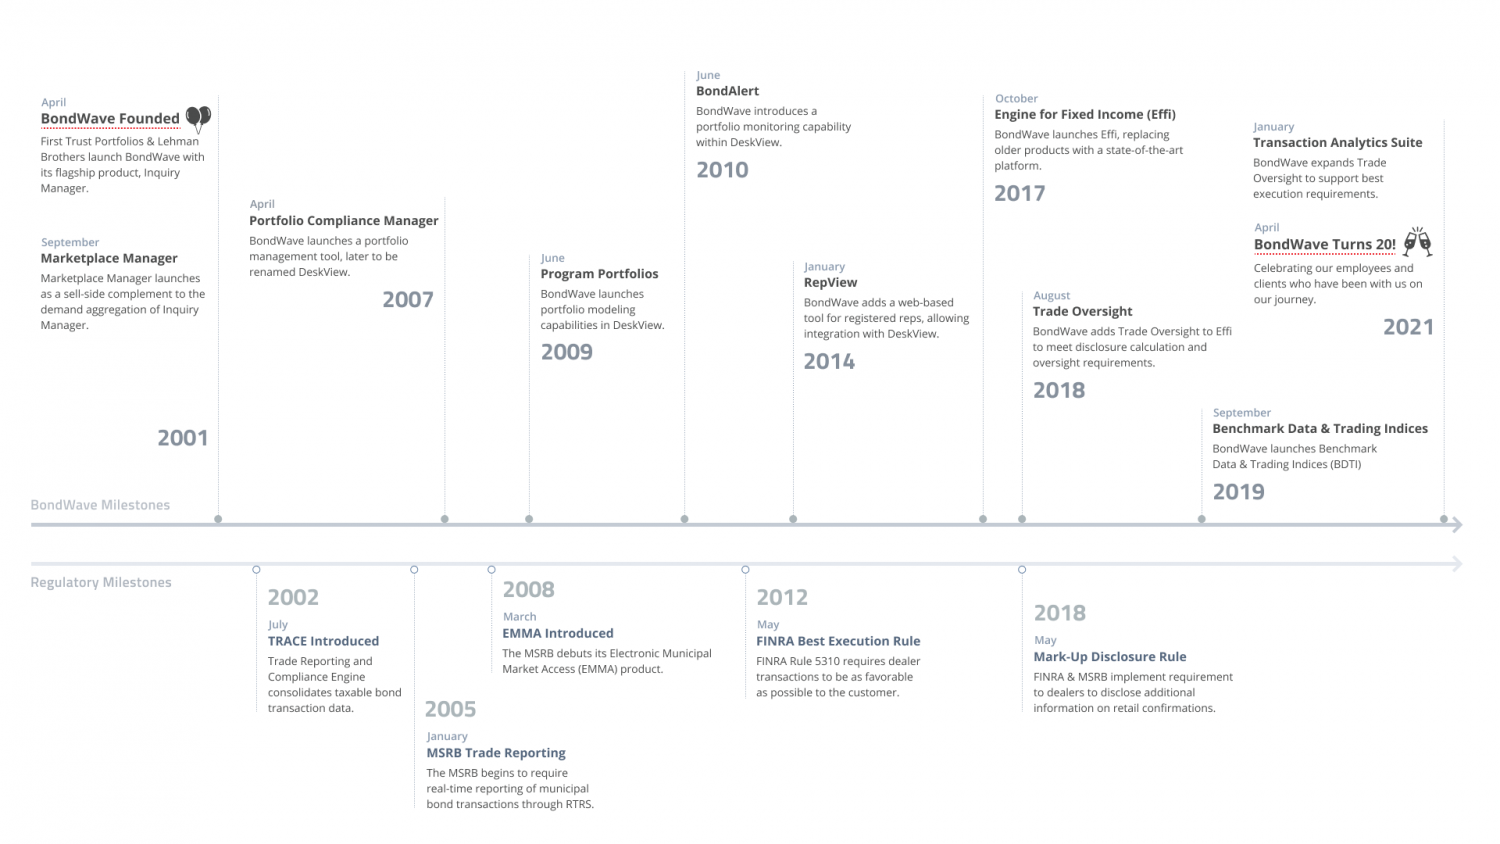 BondWave and Regulatory Milestones from 2001-2021